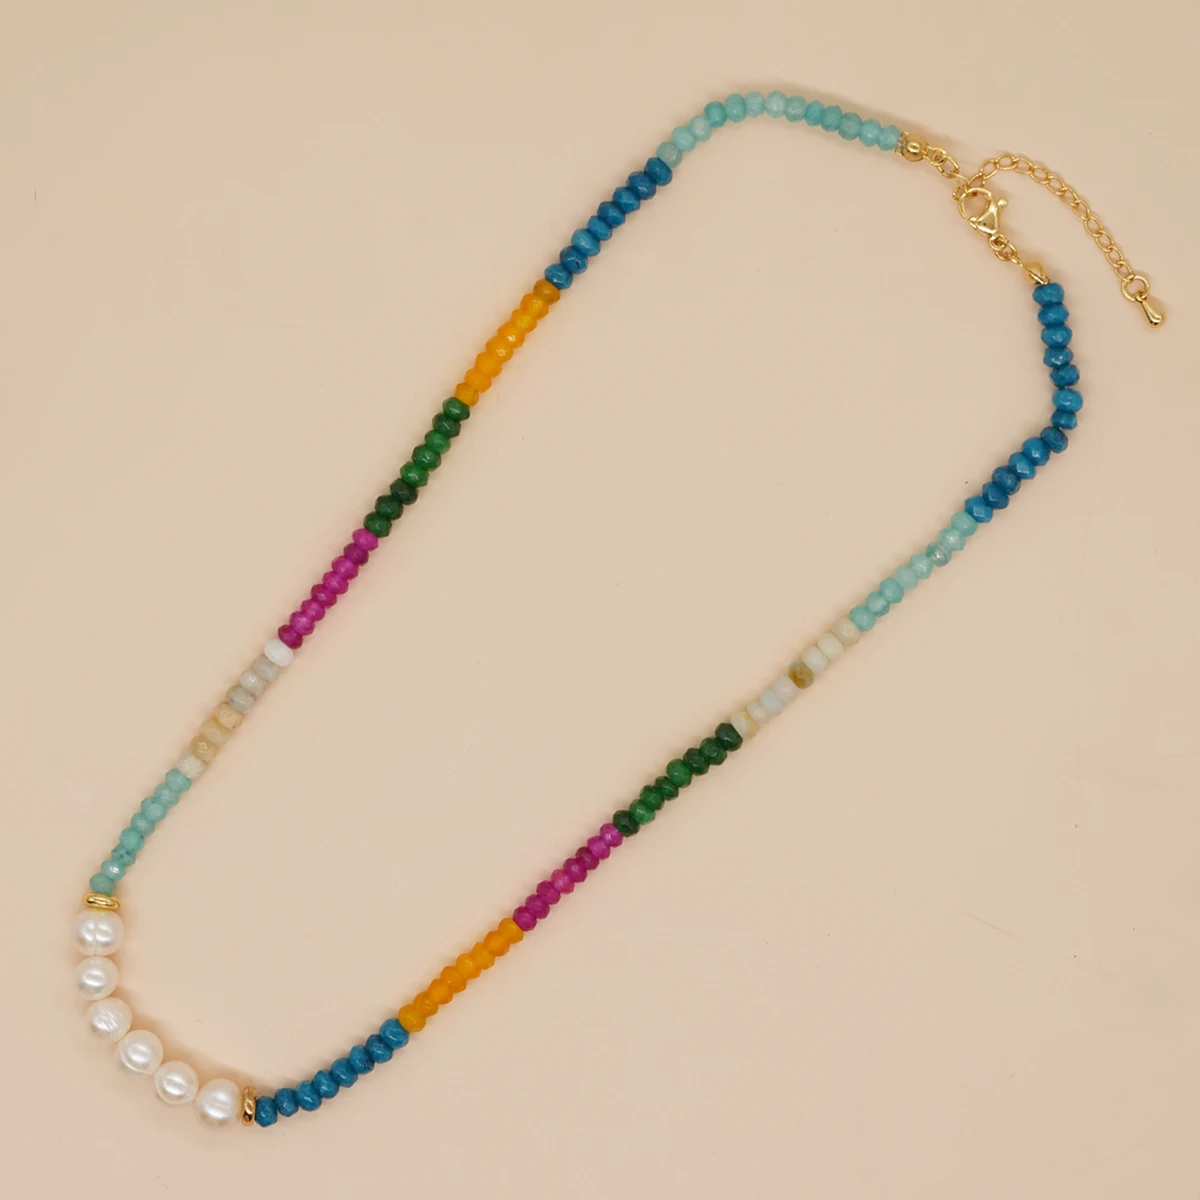 

YASTYT Summer Choker Natural Stone Jasper Colorful Freshwater Pearls Women Necklaces Beach Boho Fashion Design